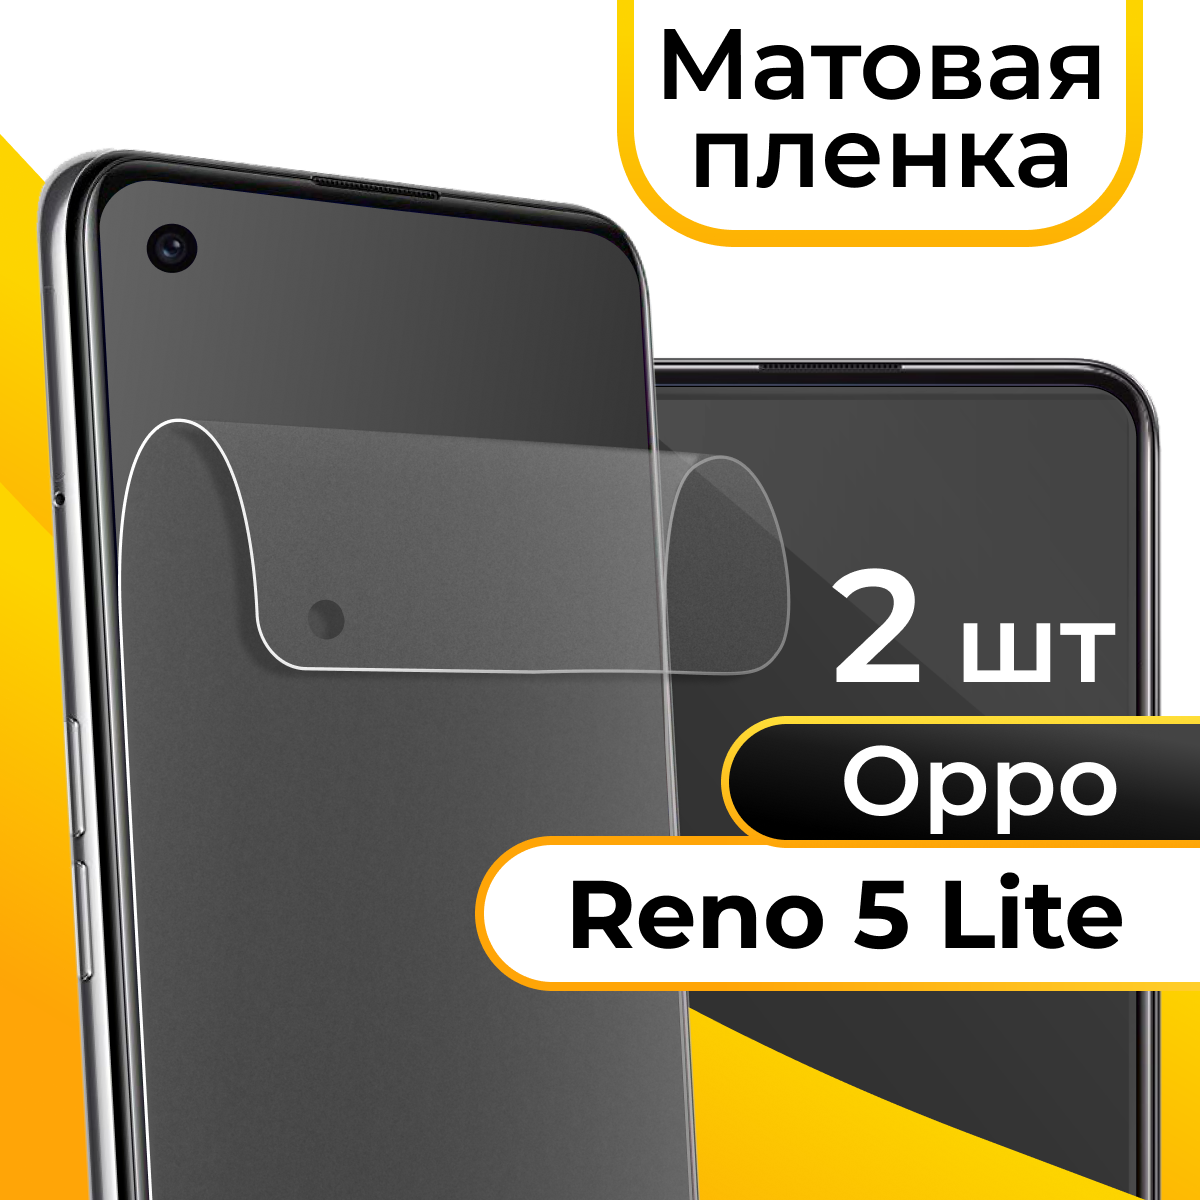 Матовая пленка для смартфона Oppo Reno 5 Lite / Защитная противоударная пленка на телефон Оппо Рено 5 Лайт / Гидрогелевая пленка